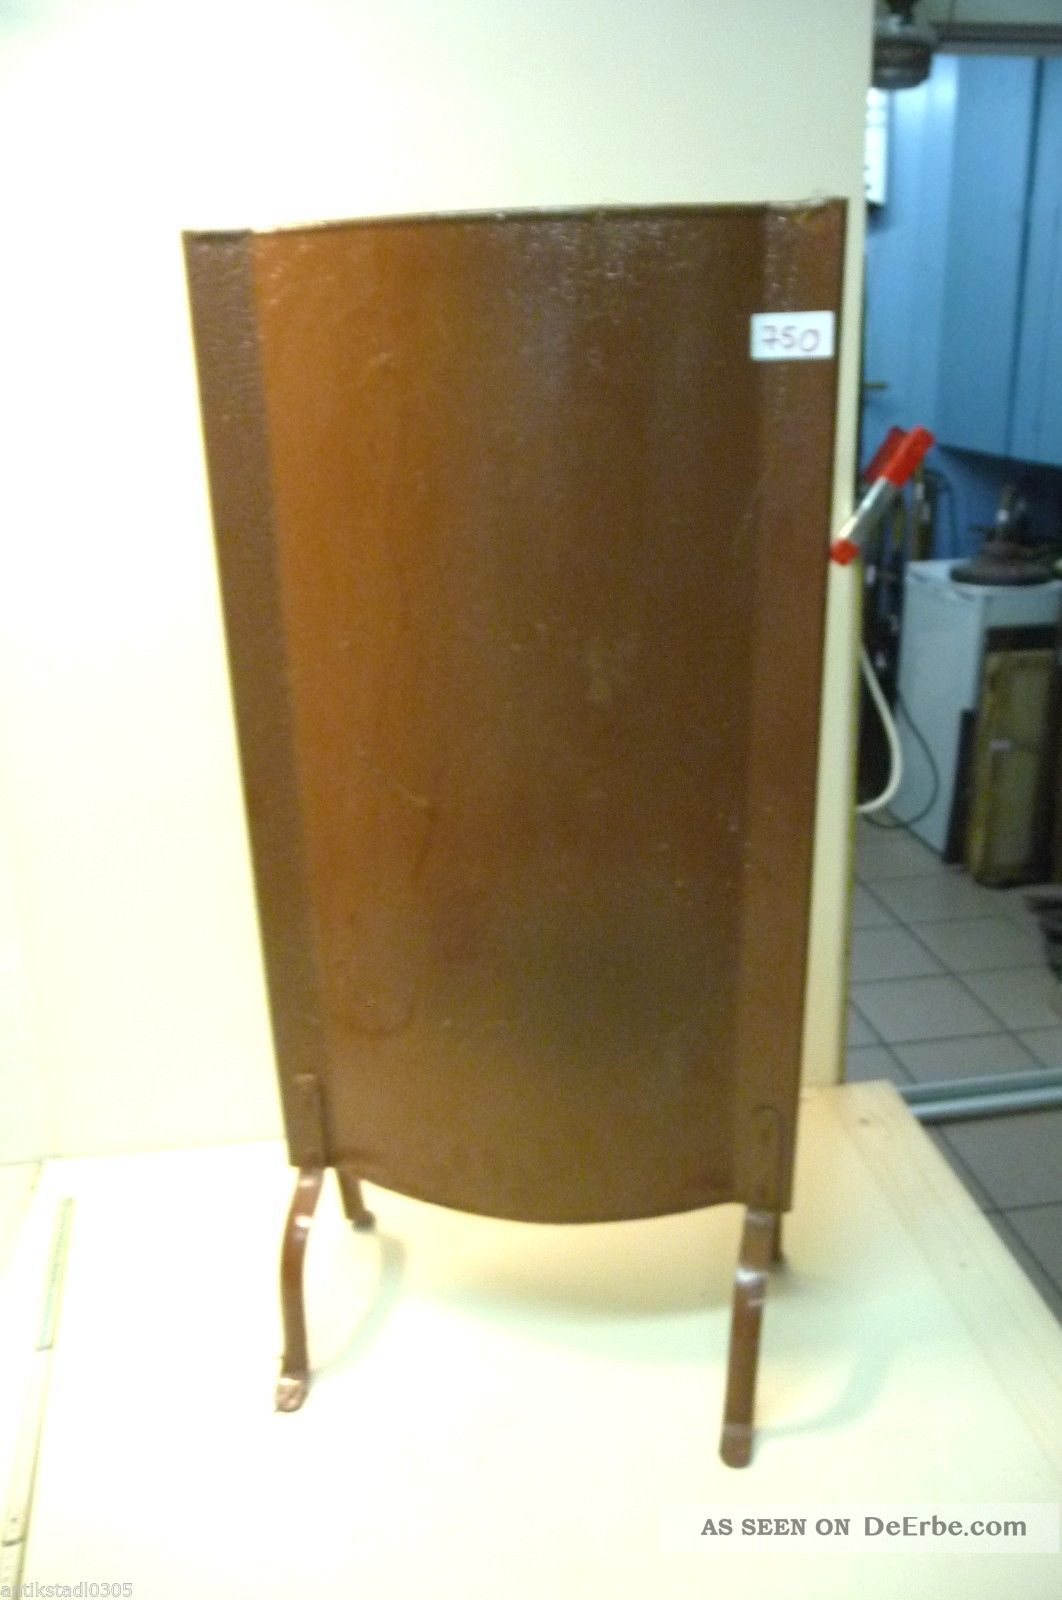 Nr.  750.  Alter Ofenschirm Feuerschutz Wärmeschutz Funkenschutz Original, vor 1960 gefertigt Bild